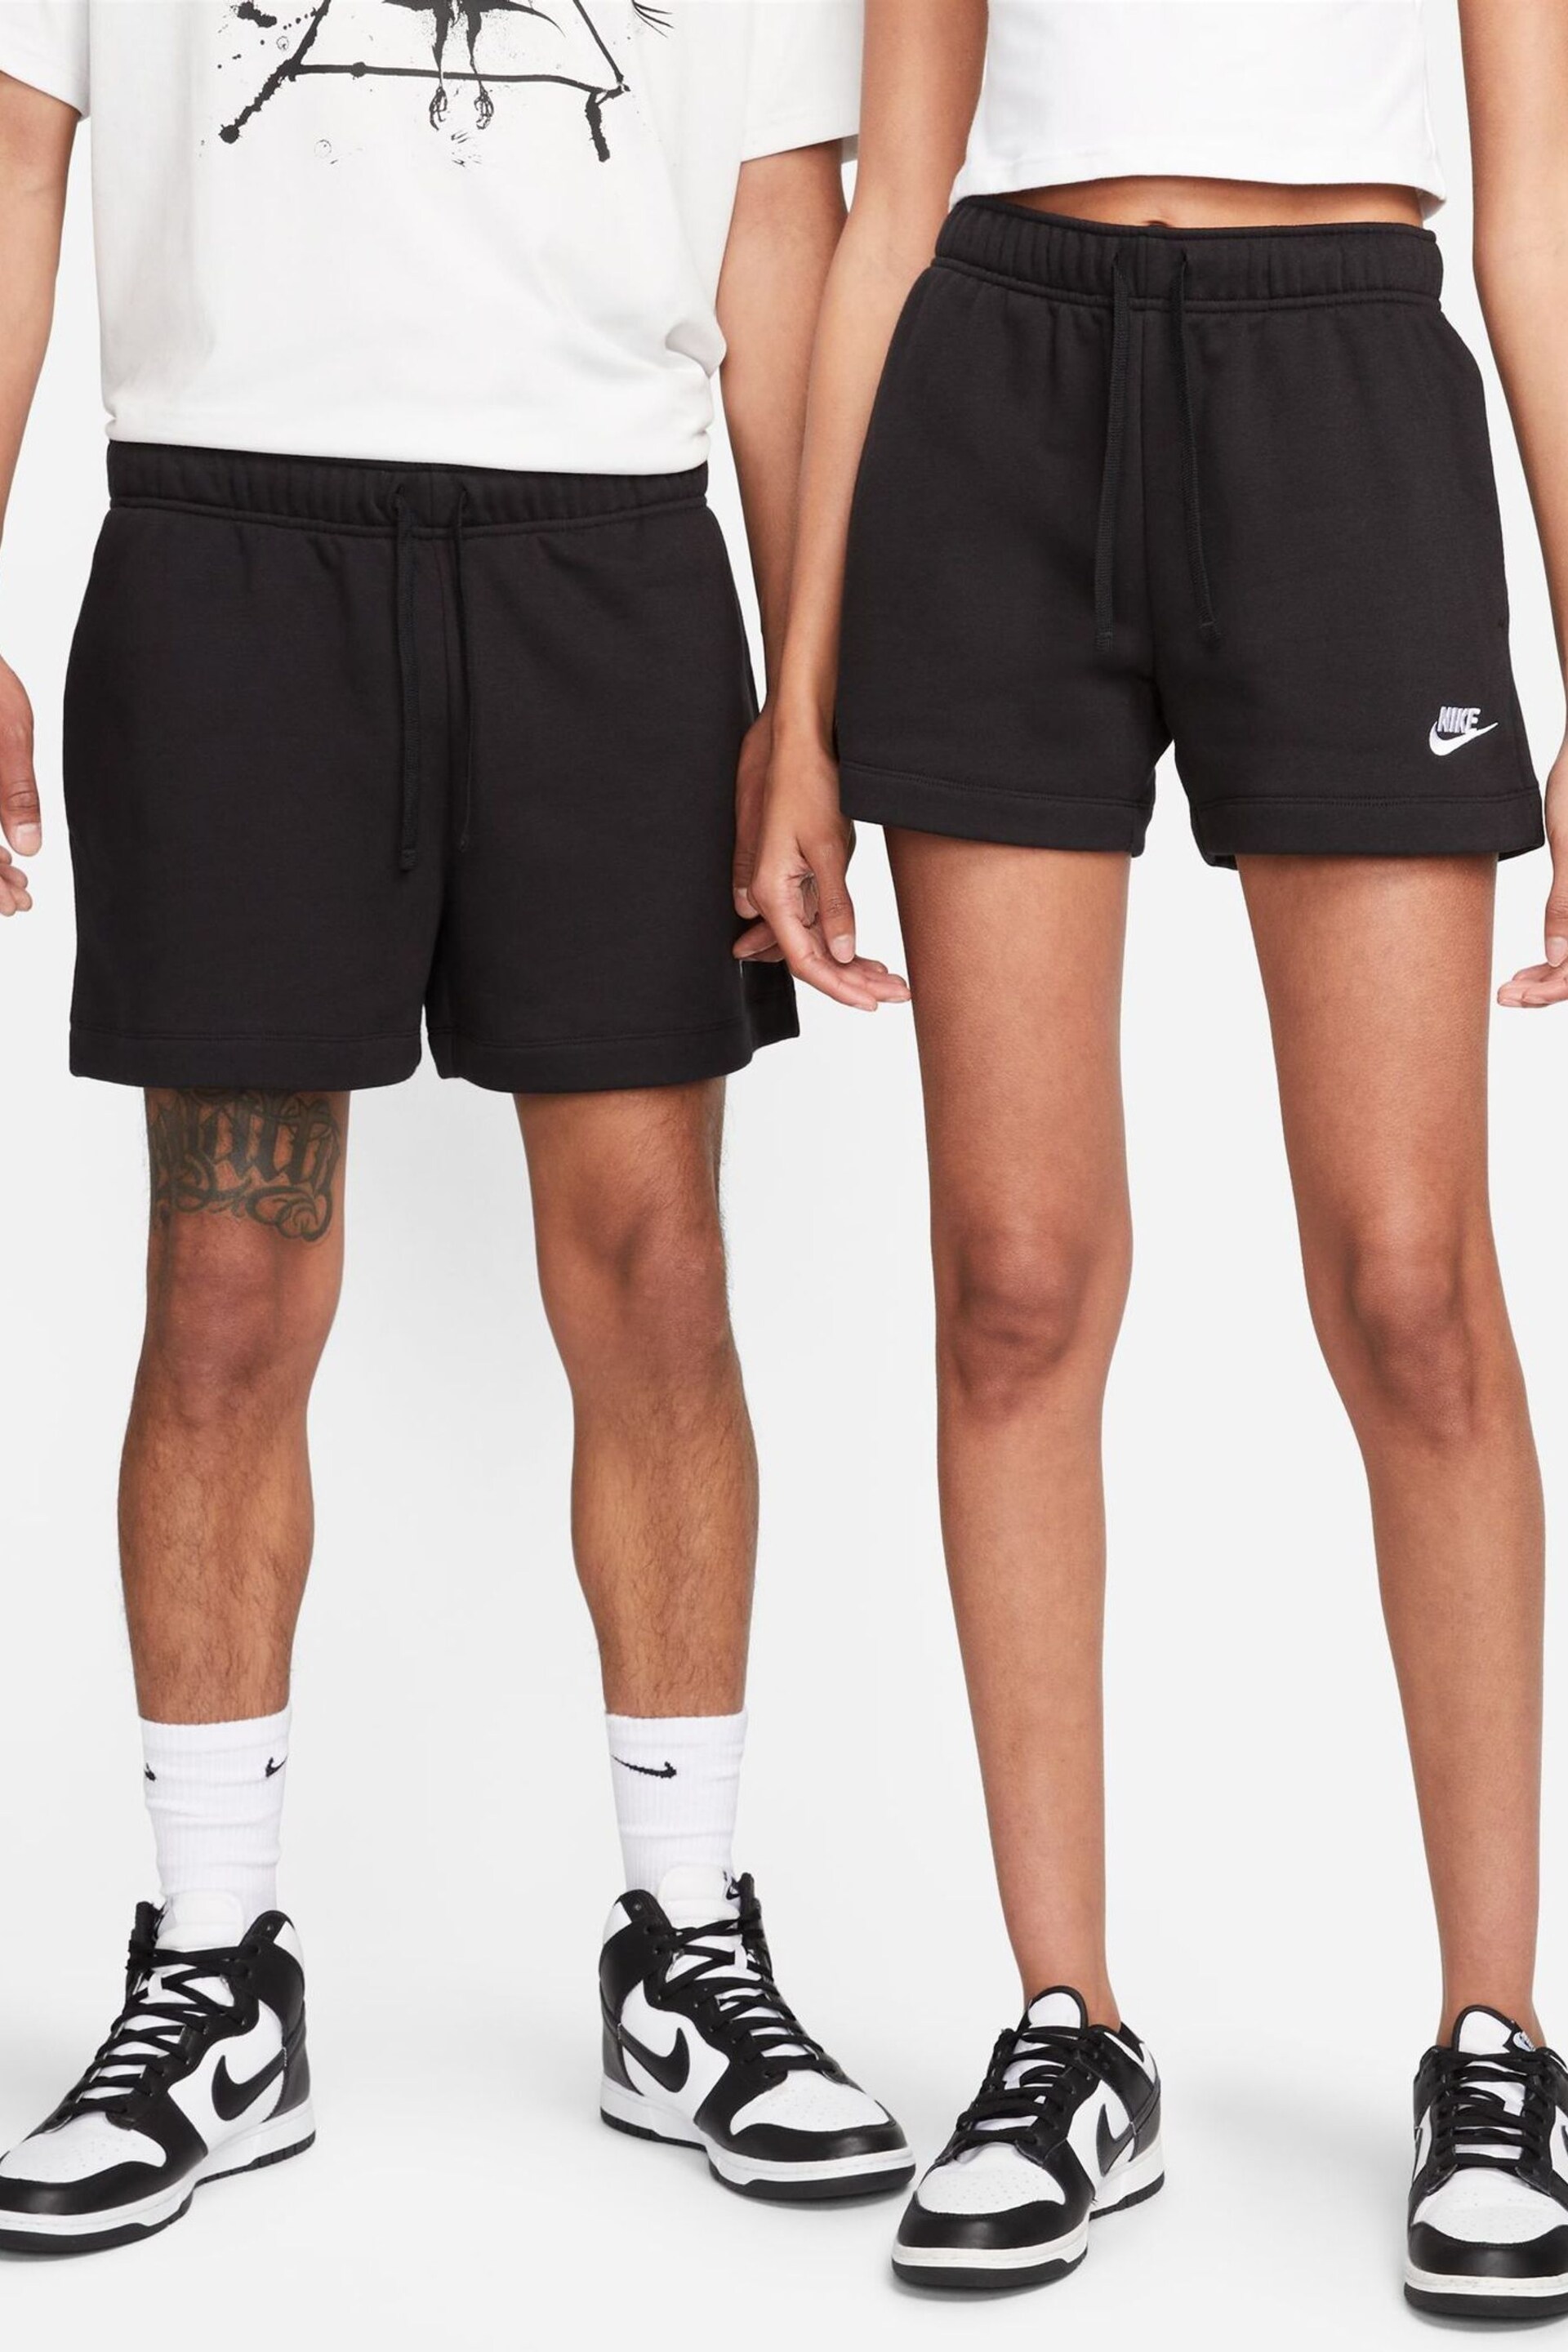 Nike Black Club Fleece Shorts - Image 4 of 7